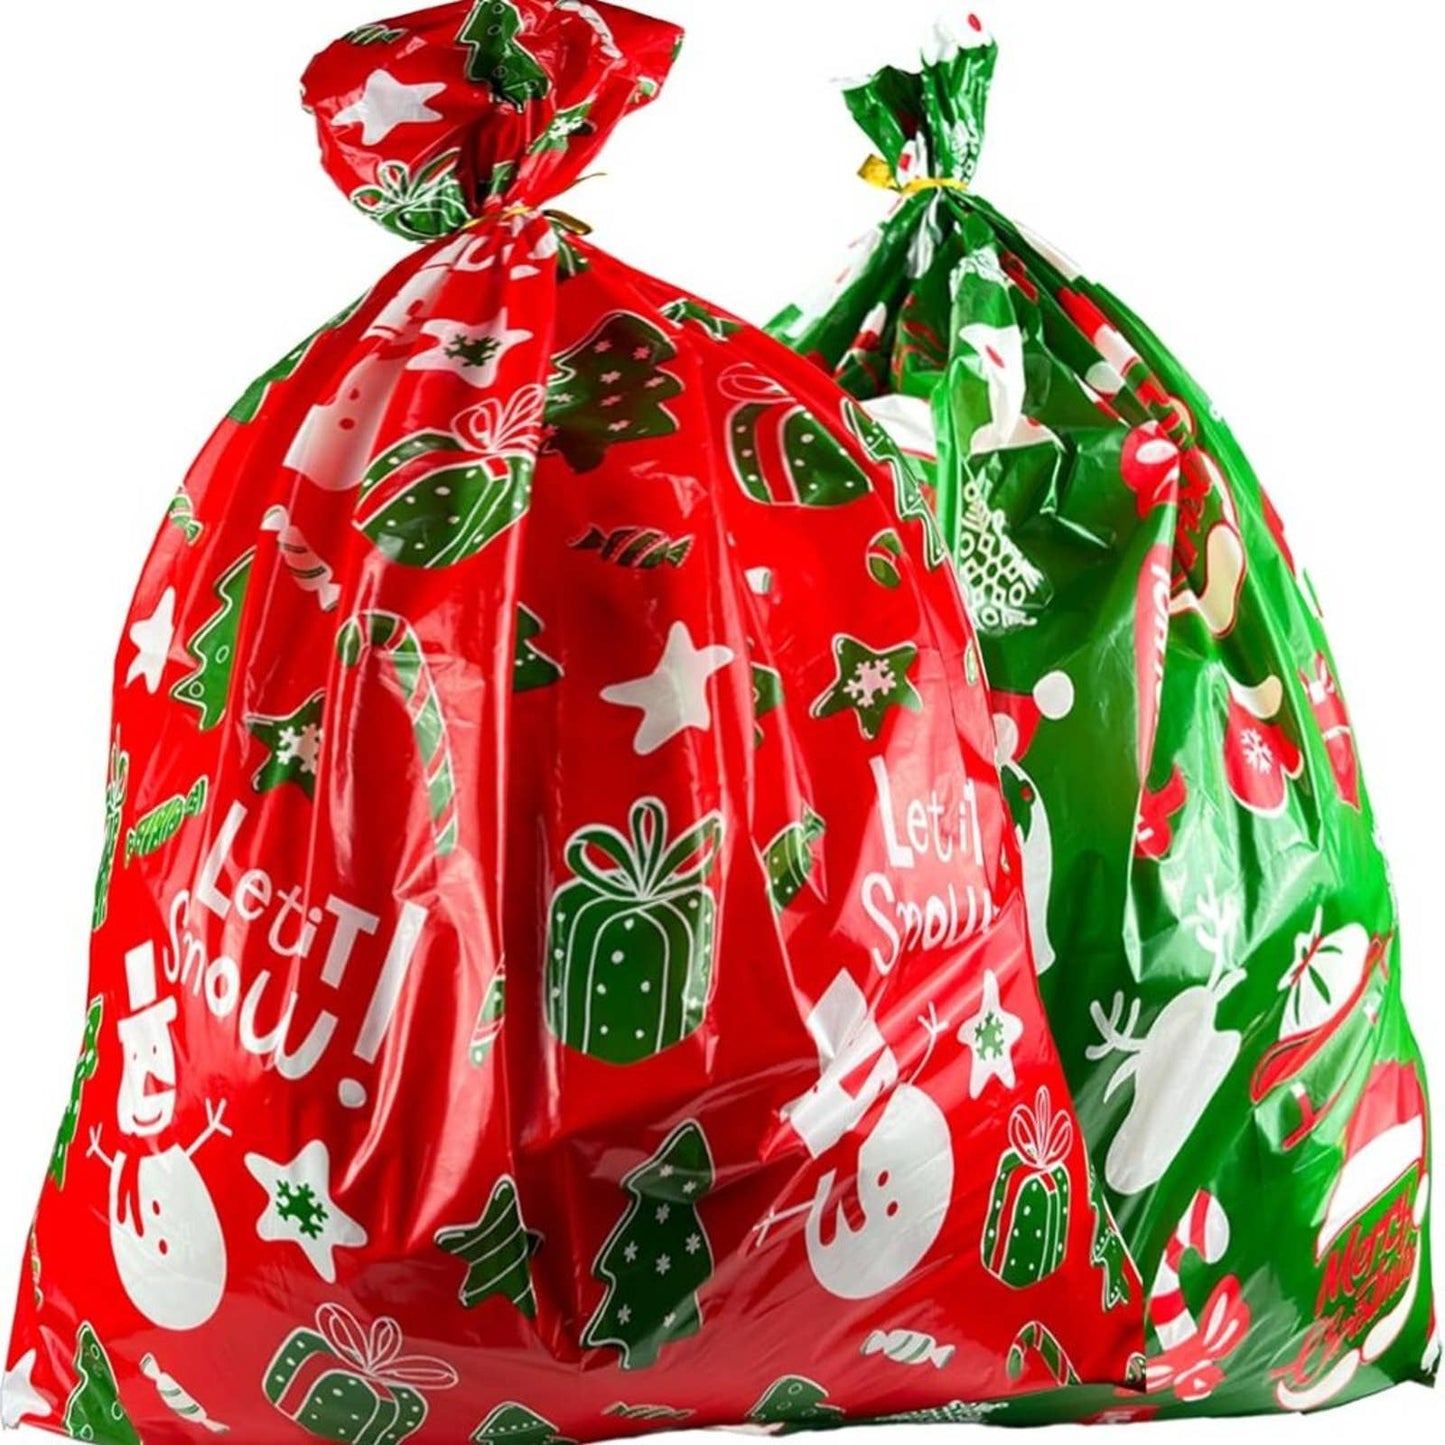 Holly LifePro Extra Large Jumbo Christmas Gift Bag 47"x36", Heavy Duty Plastic